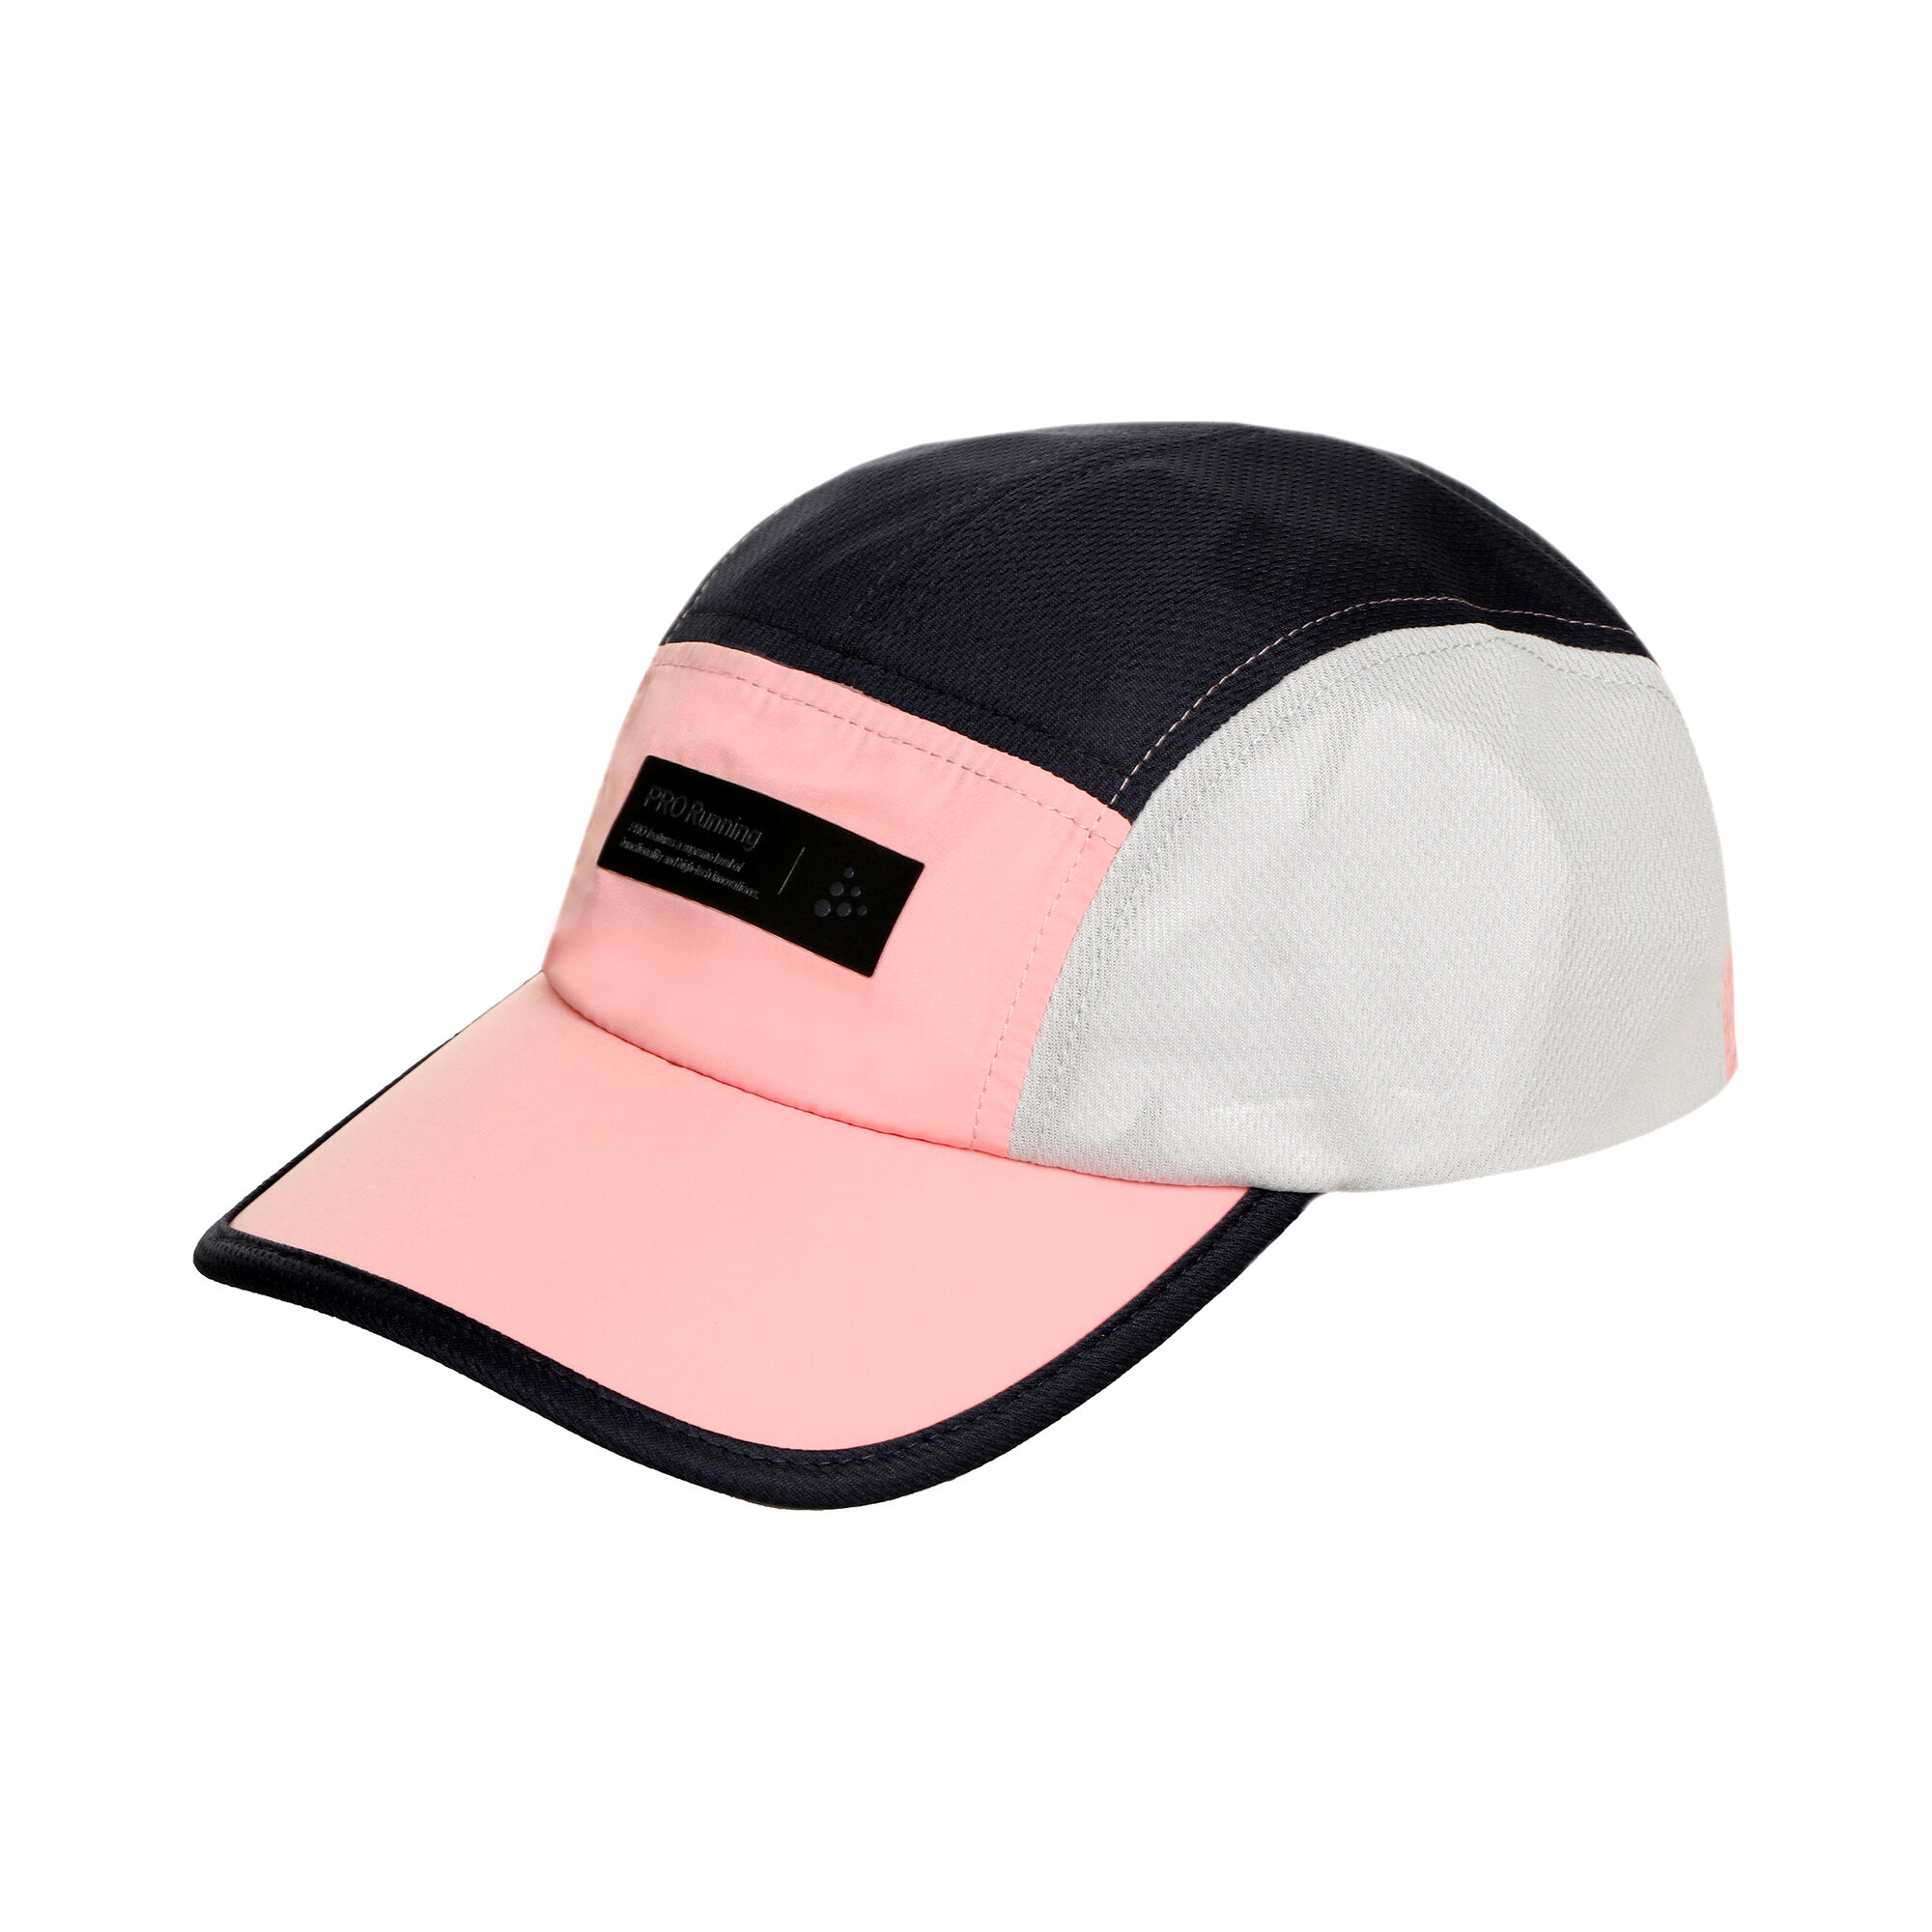 Buy Craft Pro Hypervent Cap Black, Pink online